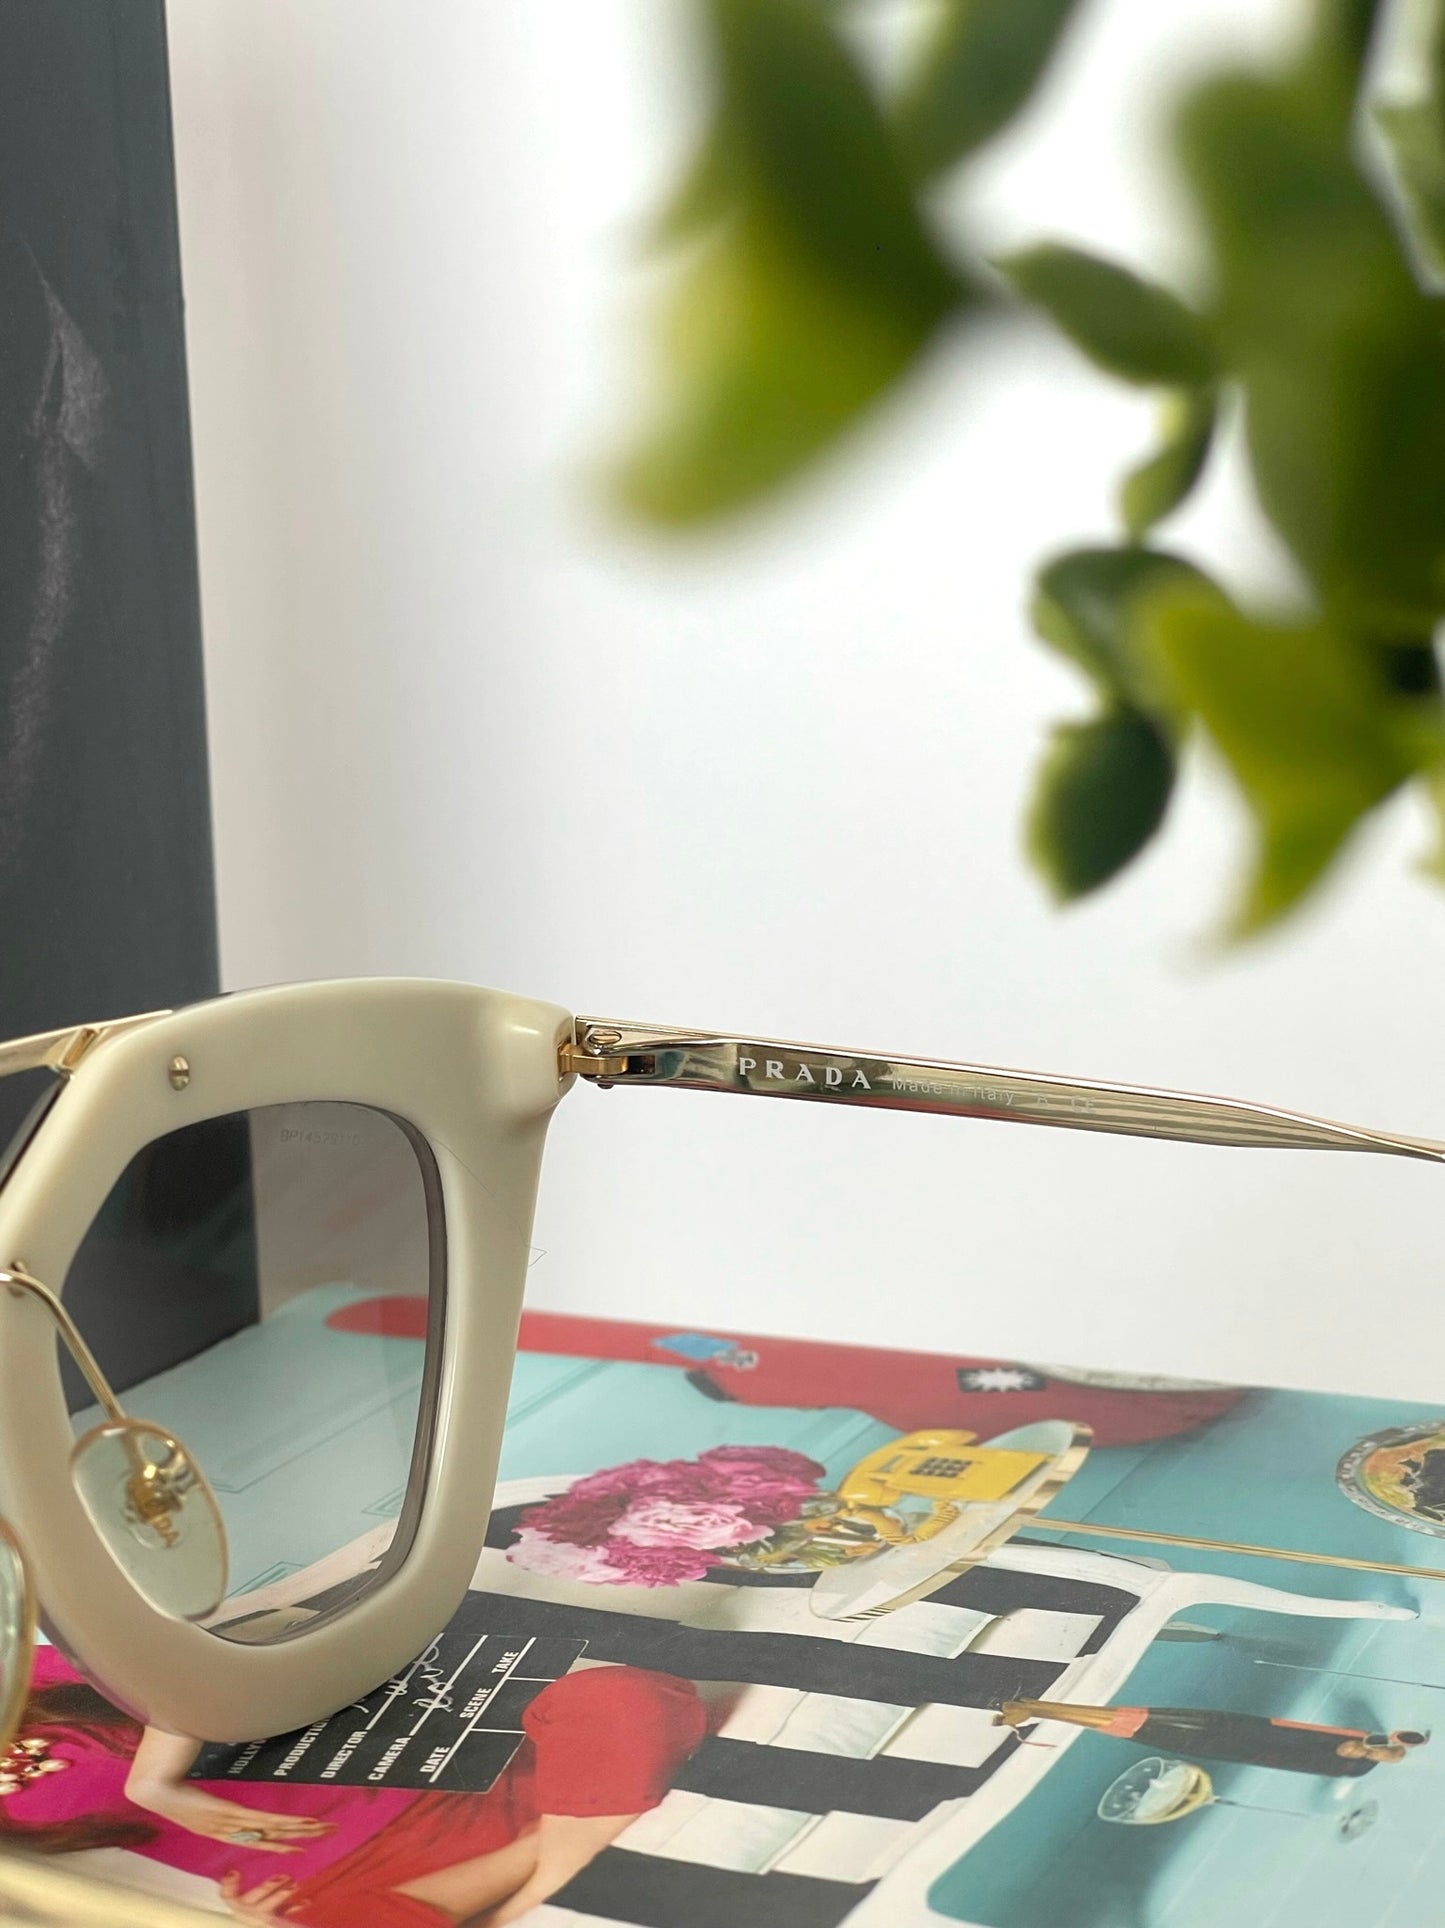 Prada Cream Cateye Sunglasses Style #SPR 09Q